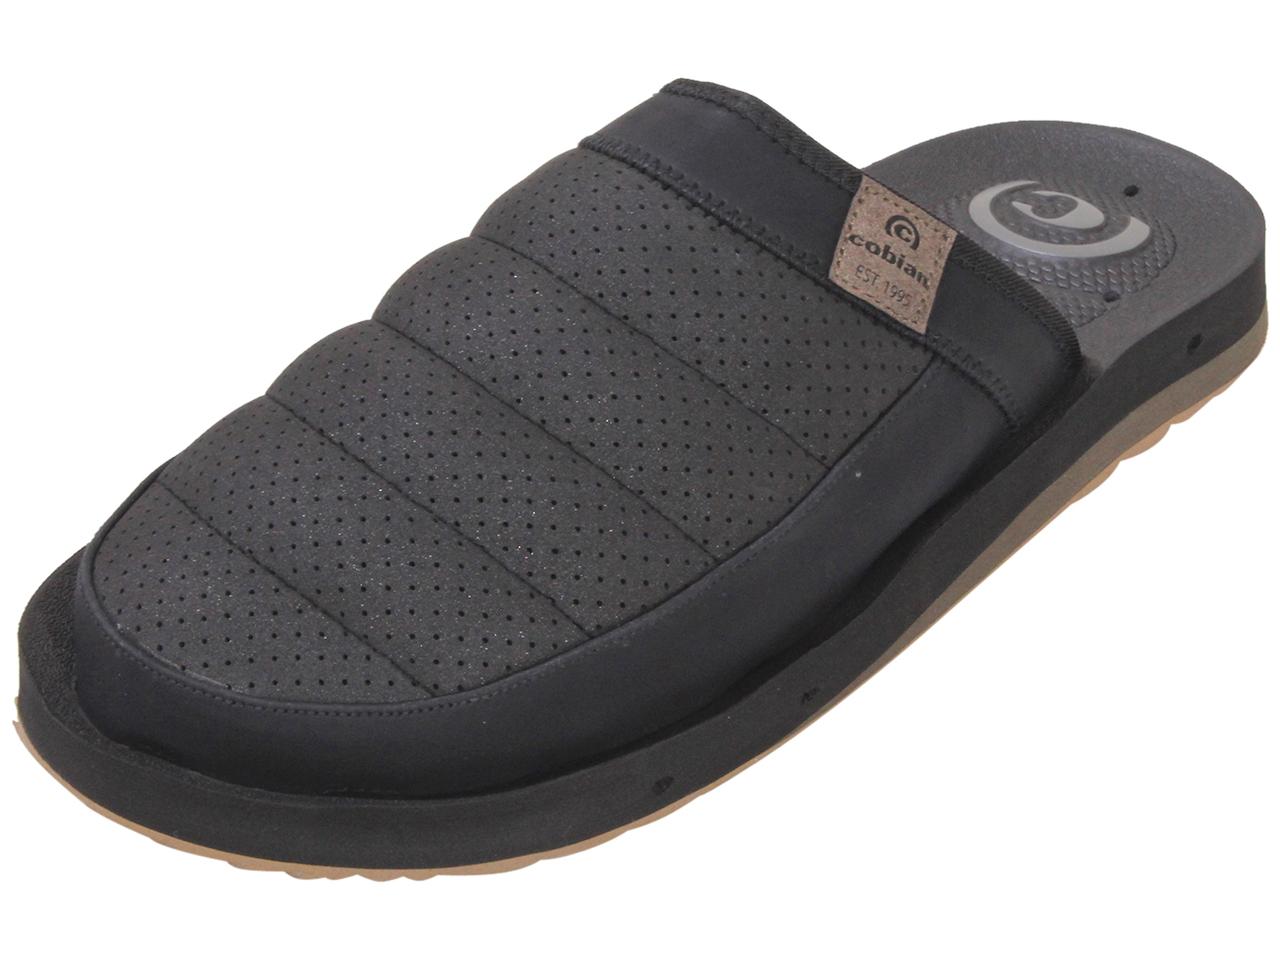 Cobian Men's Hobgood-Draino-Mule Clog Sandals Shoes Black Sz. 8 ...